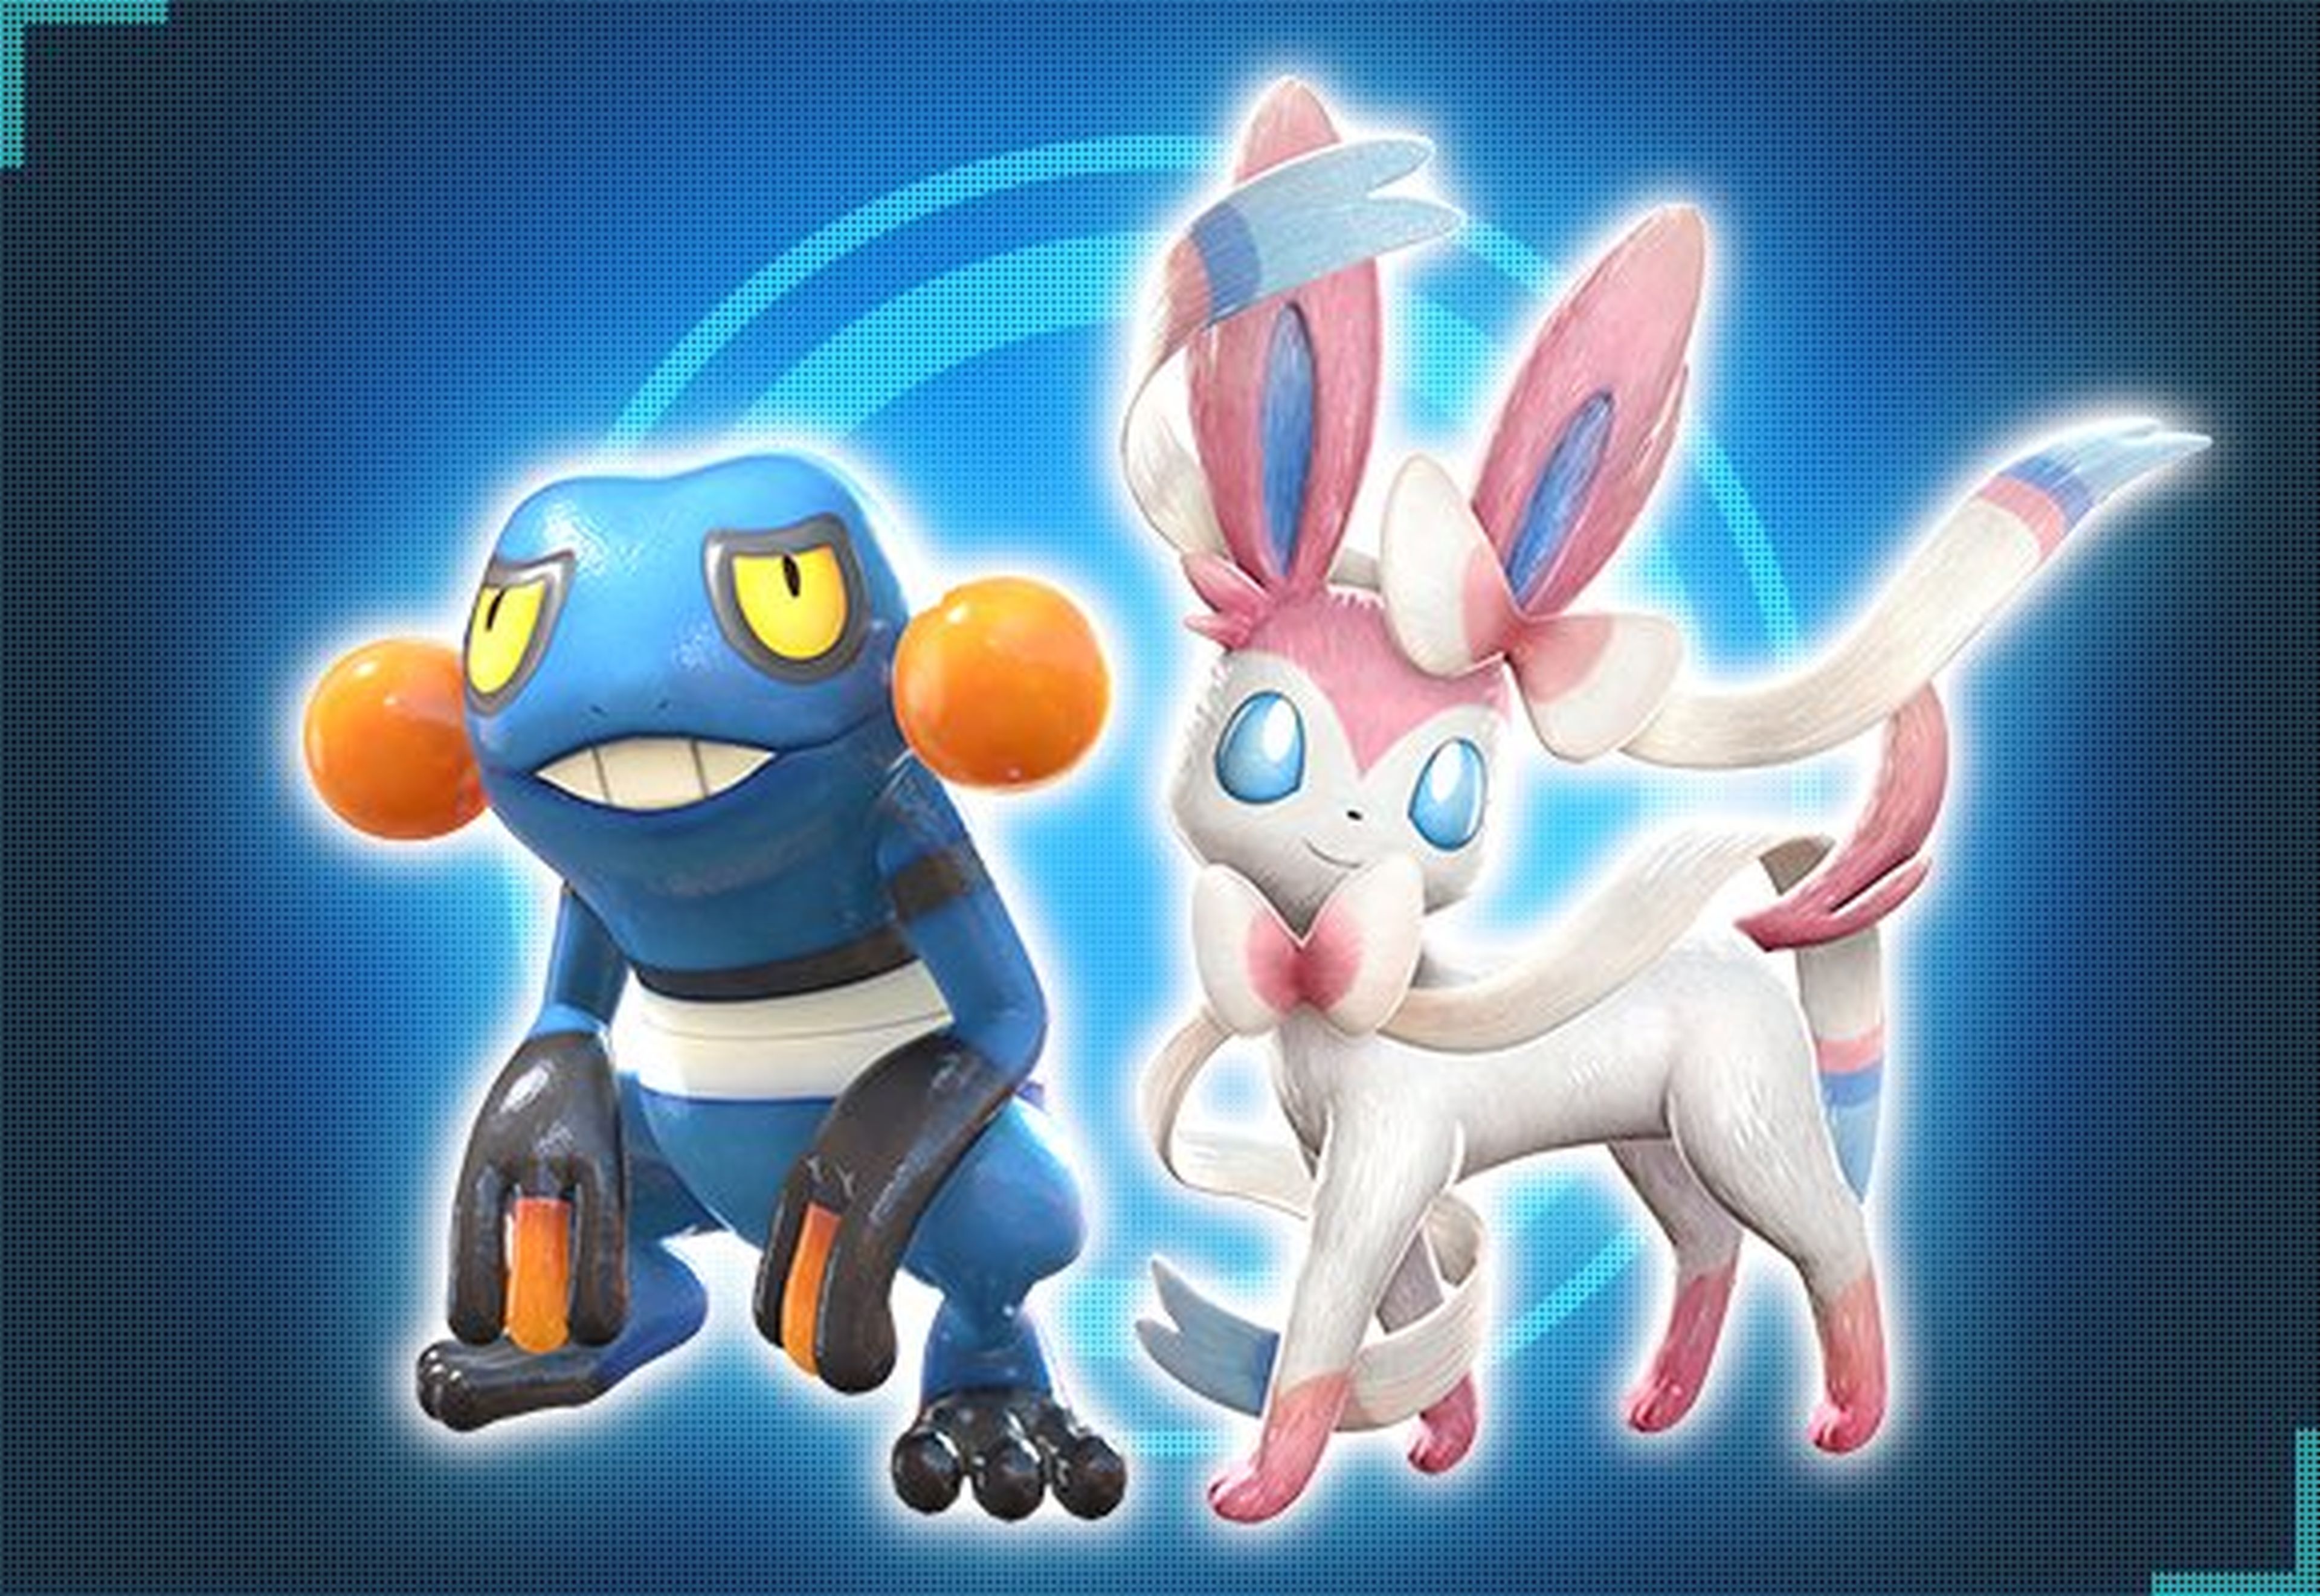 Pokkén Tournament para Wii U confirma un Pokémon más